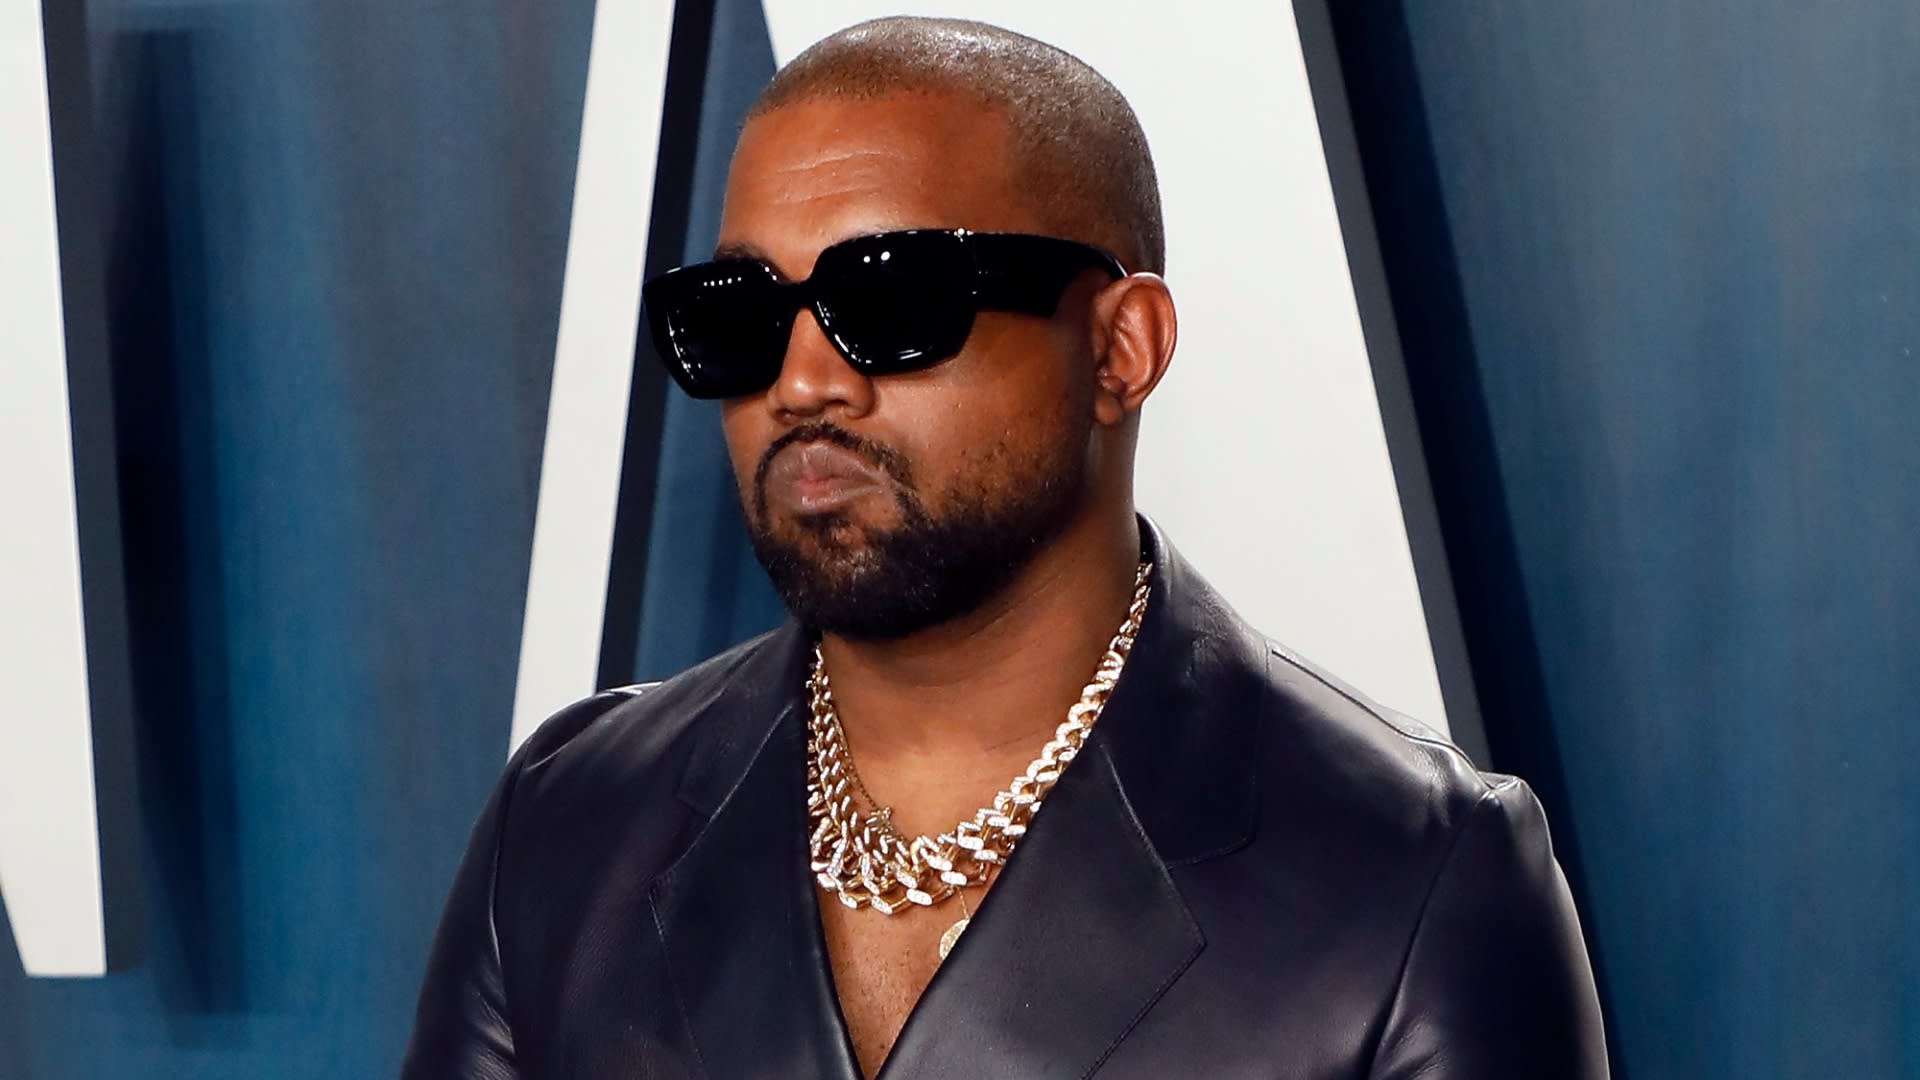 Former Nintendo of America President recalls refusing Kanye West collaboration offer